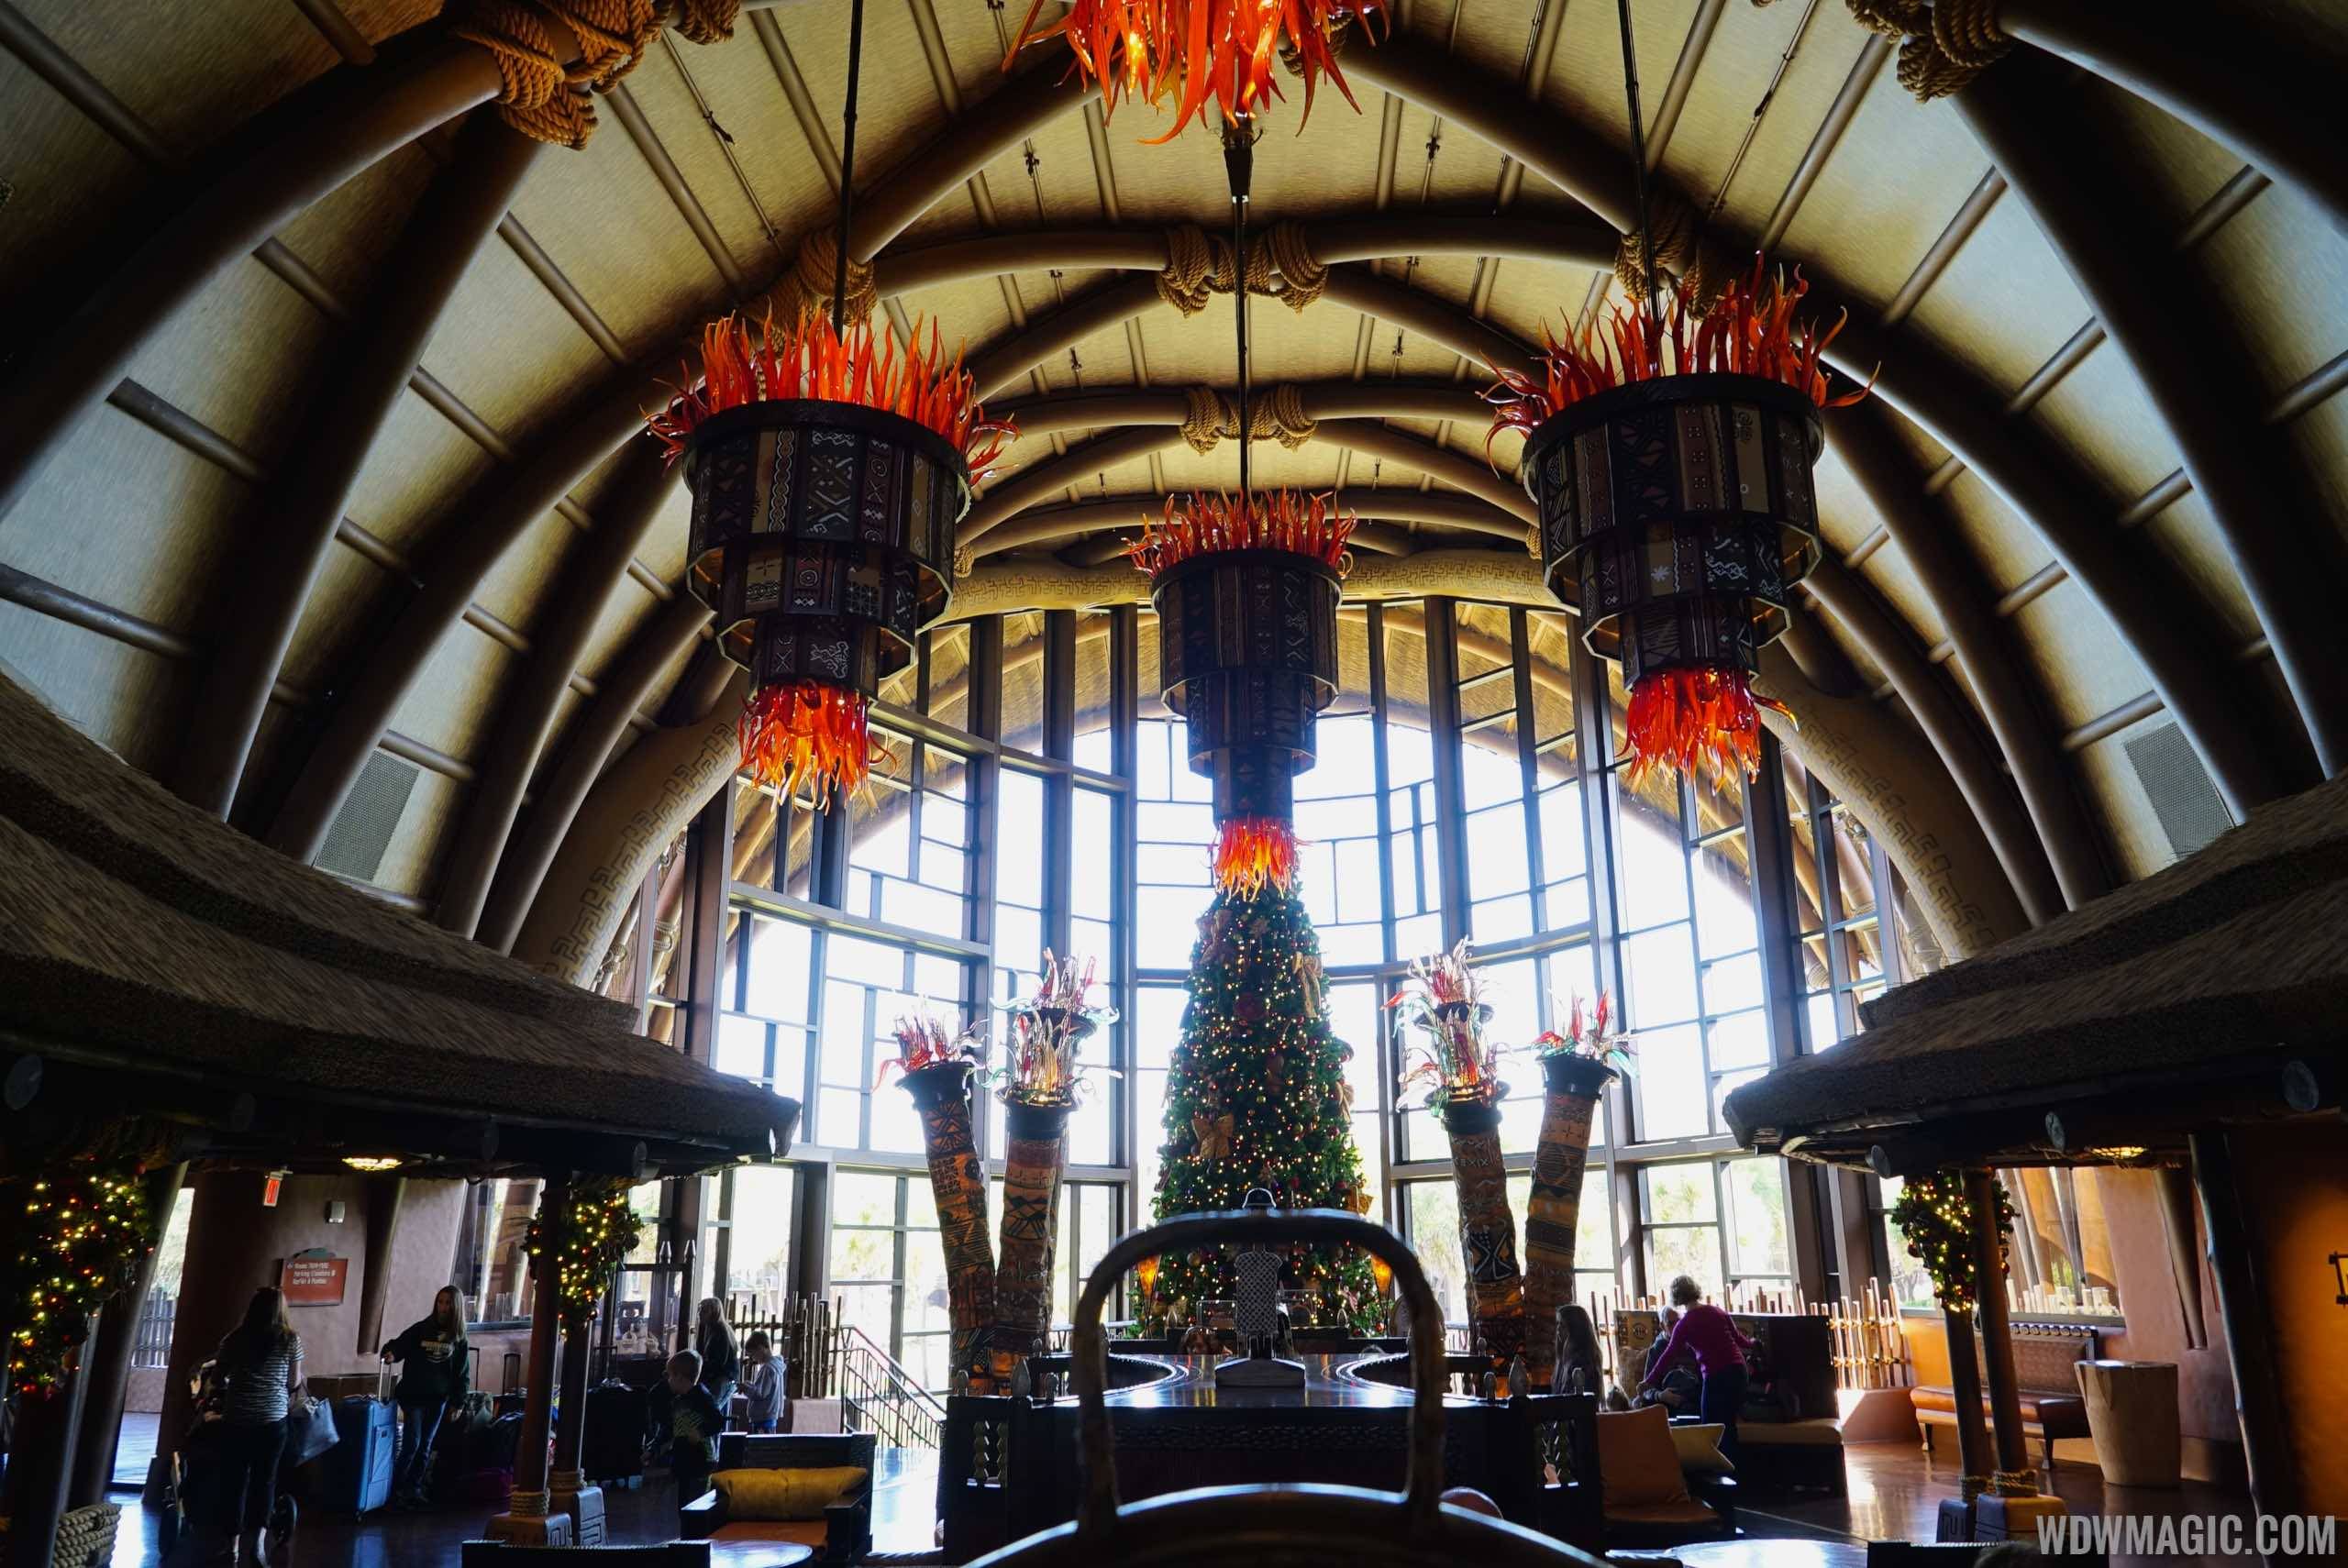 Disney's Animal Kingdom Lodge Kidani Village holiday decor 2014